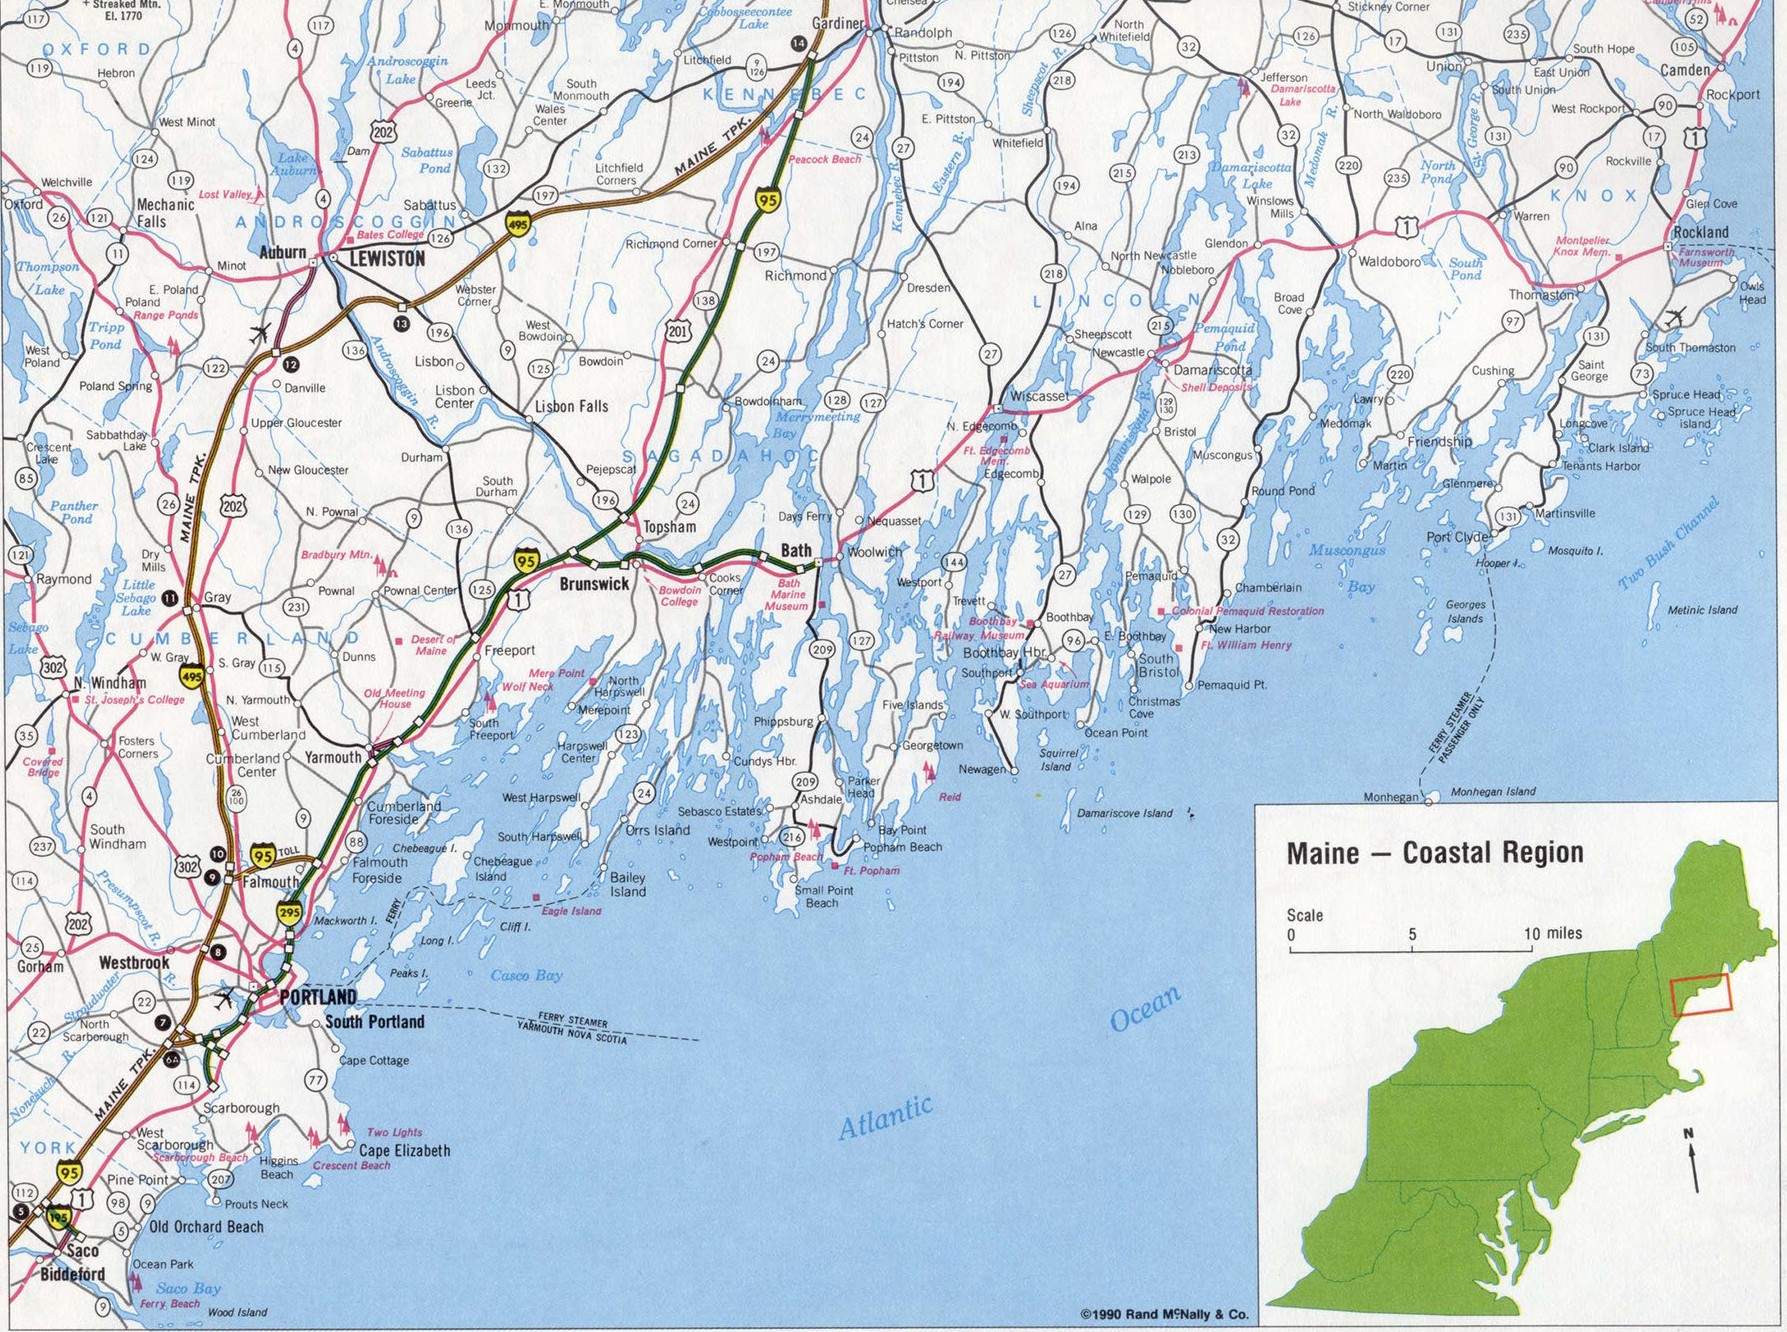 Coastal Region Maine State Map Image Detailed Map Of Coastal Region Maine